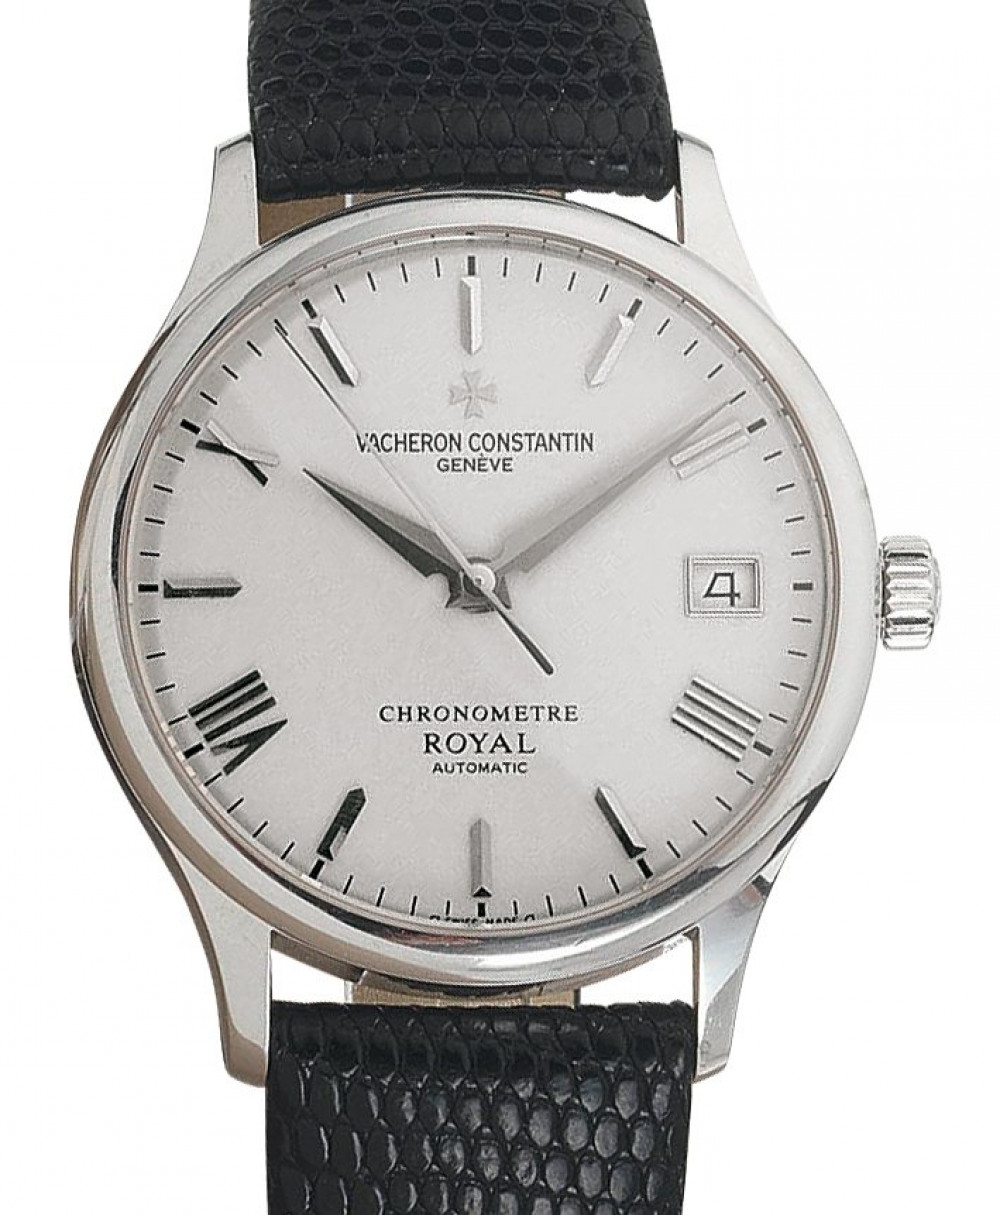 Zegarek firmy Vacheron Constantin, model Chronometre Royal